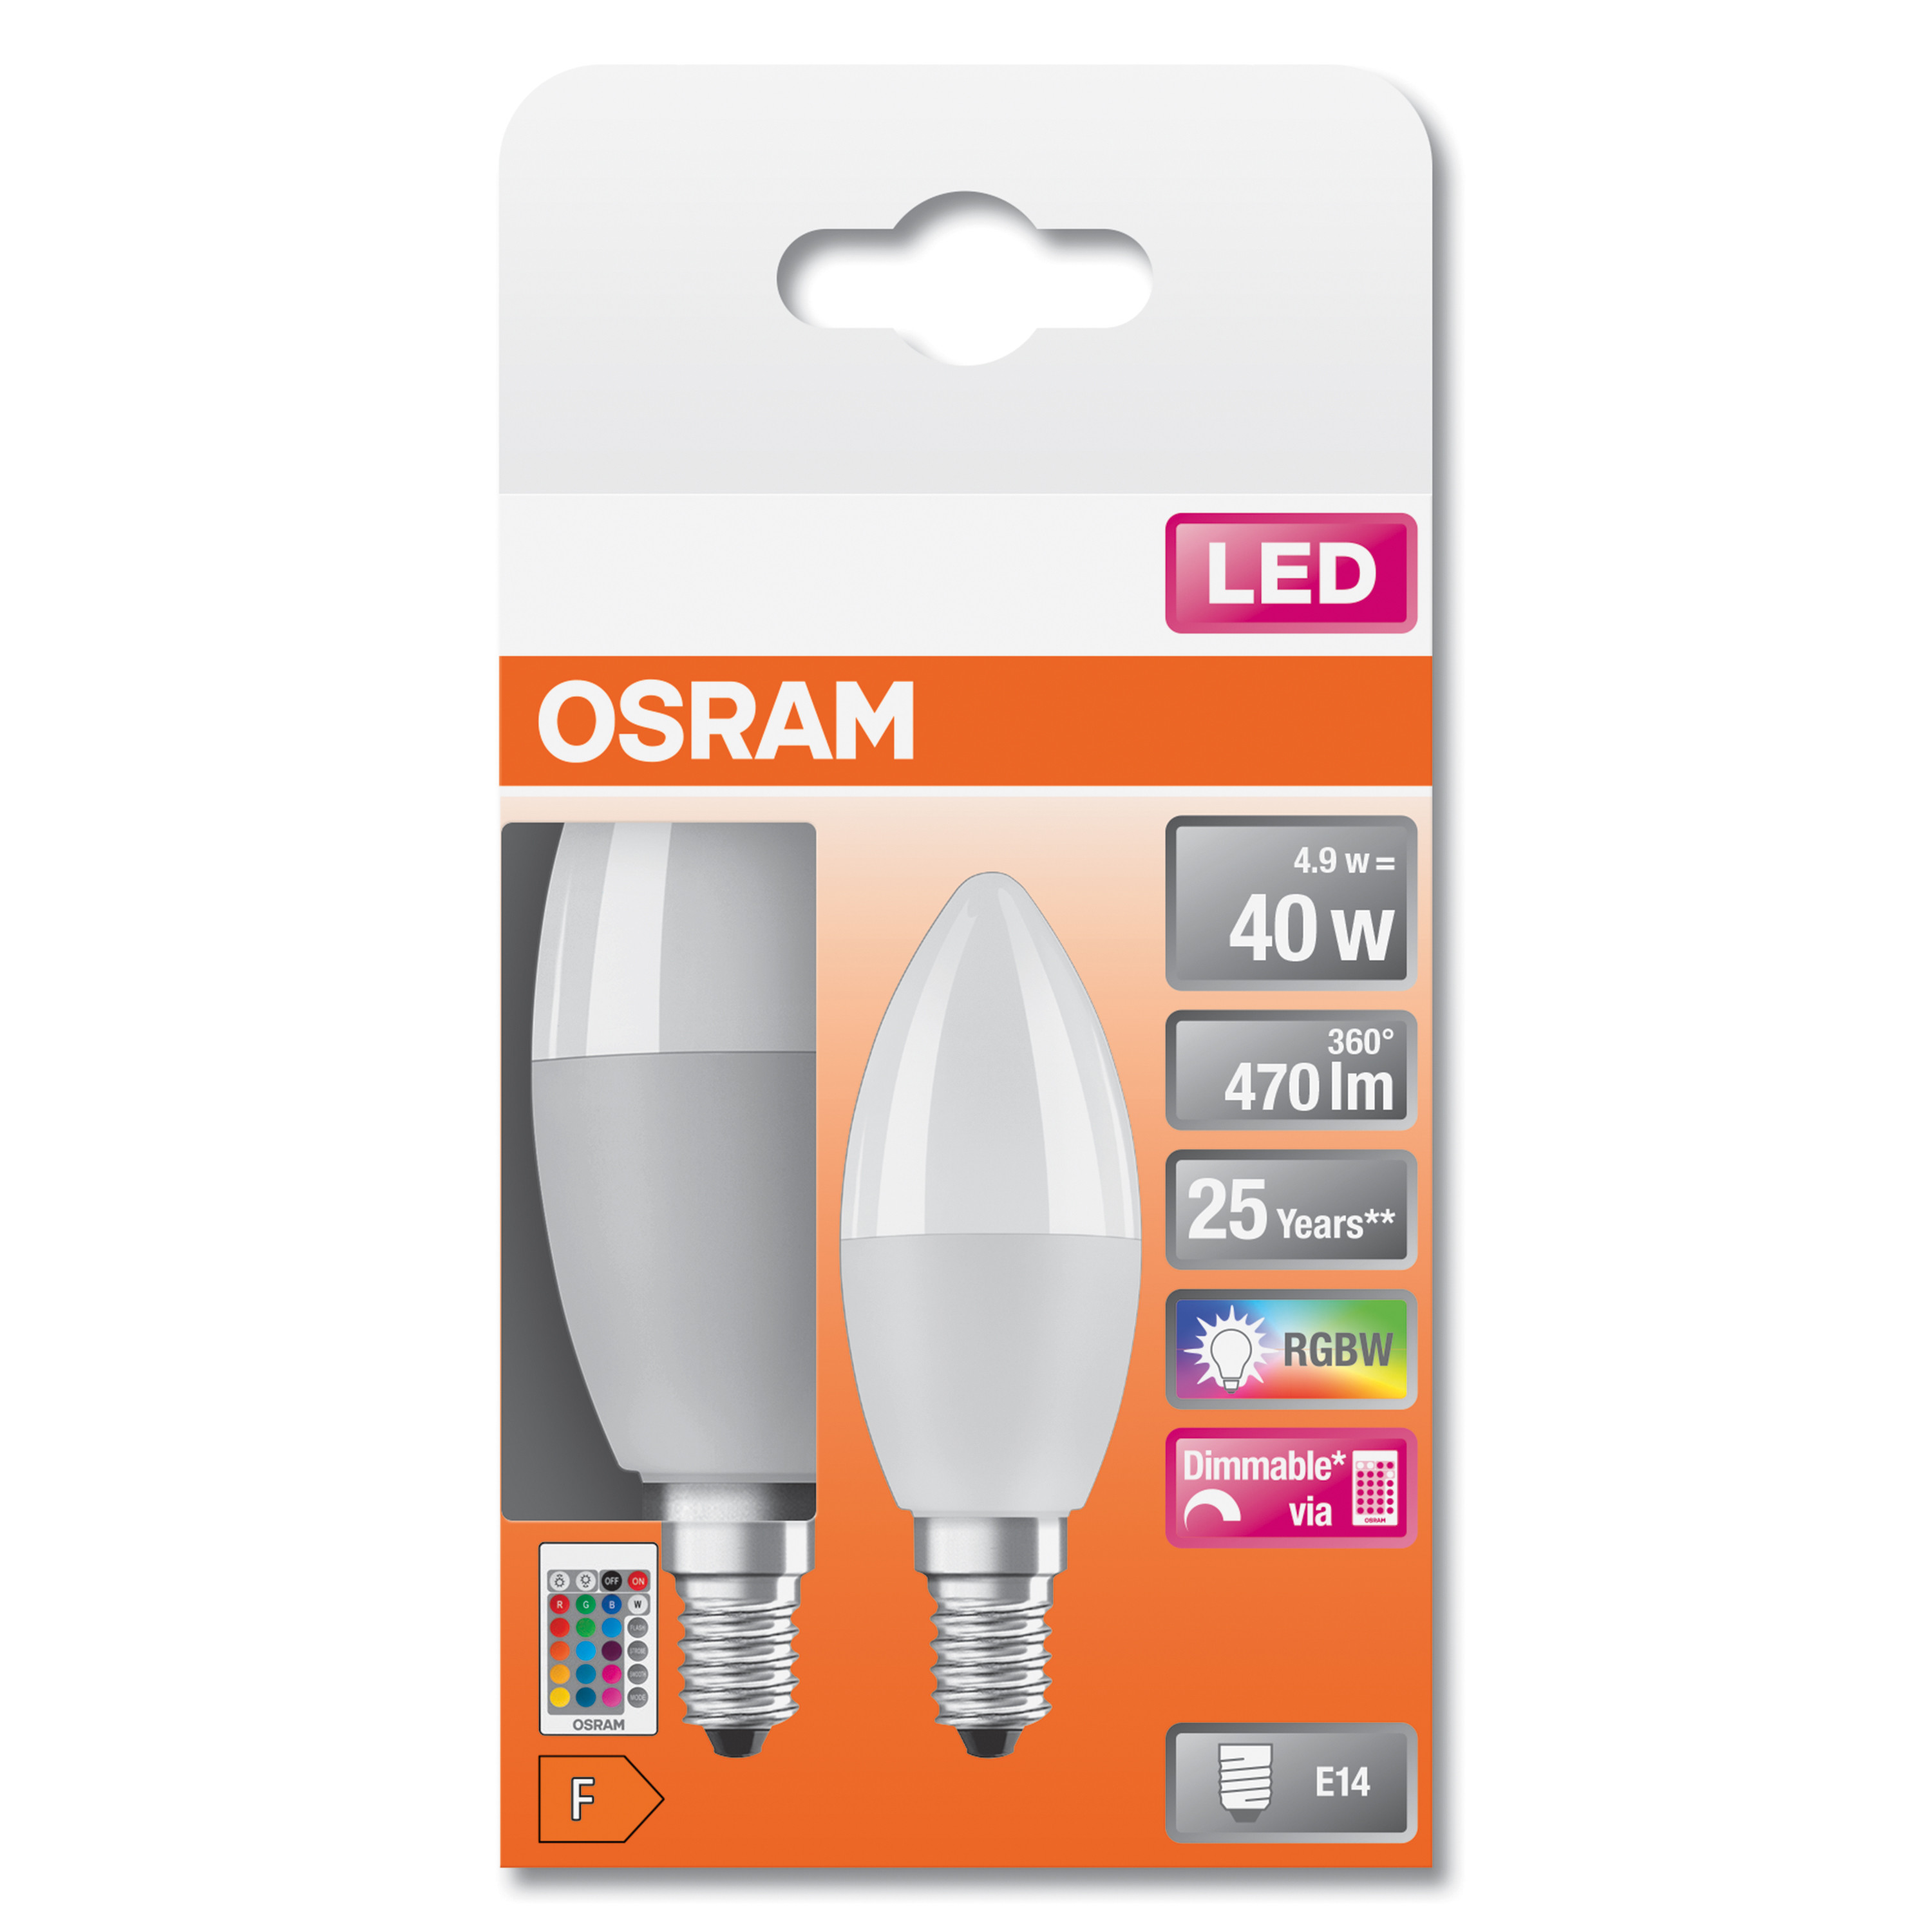 OSRAM  LED Retrofit Lampe control RGBW Warmweiß LED with lumen lamps remote 470